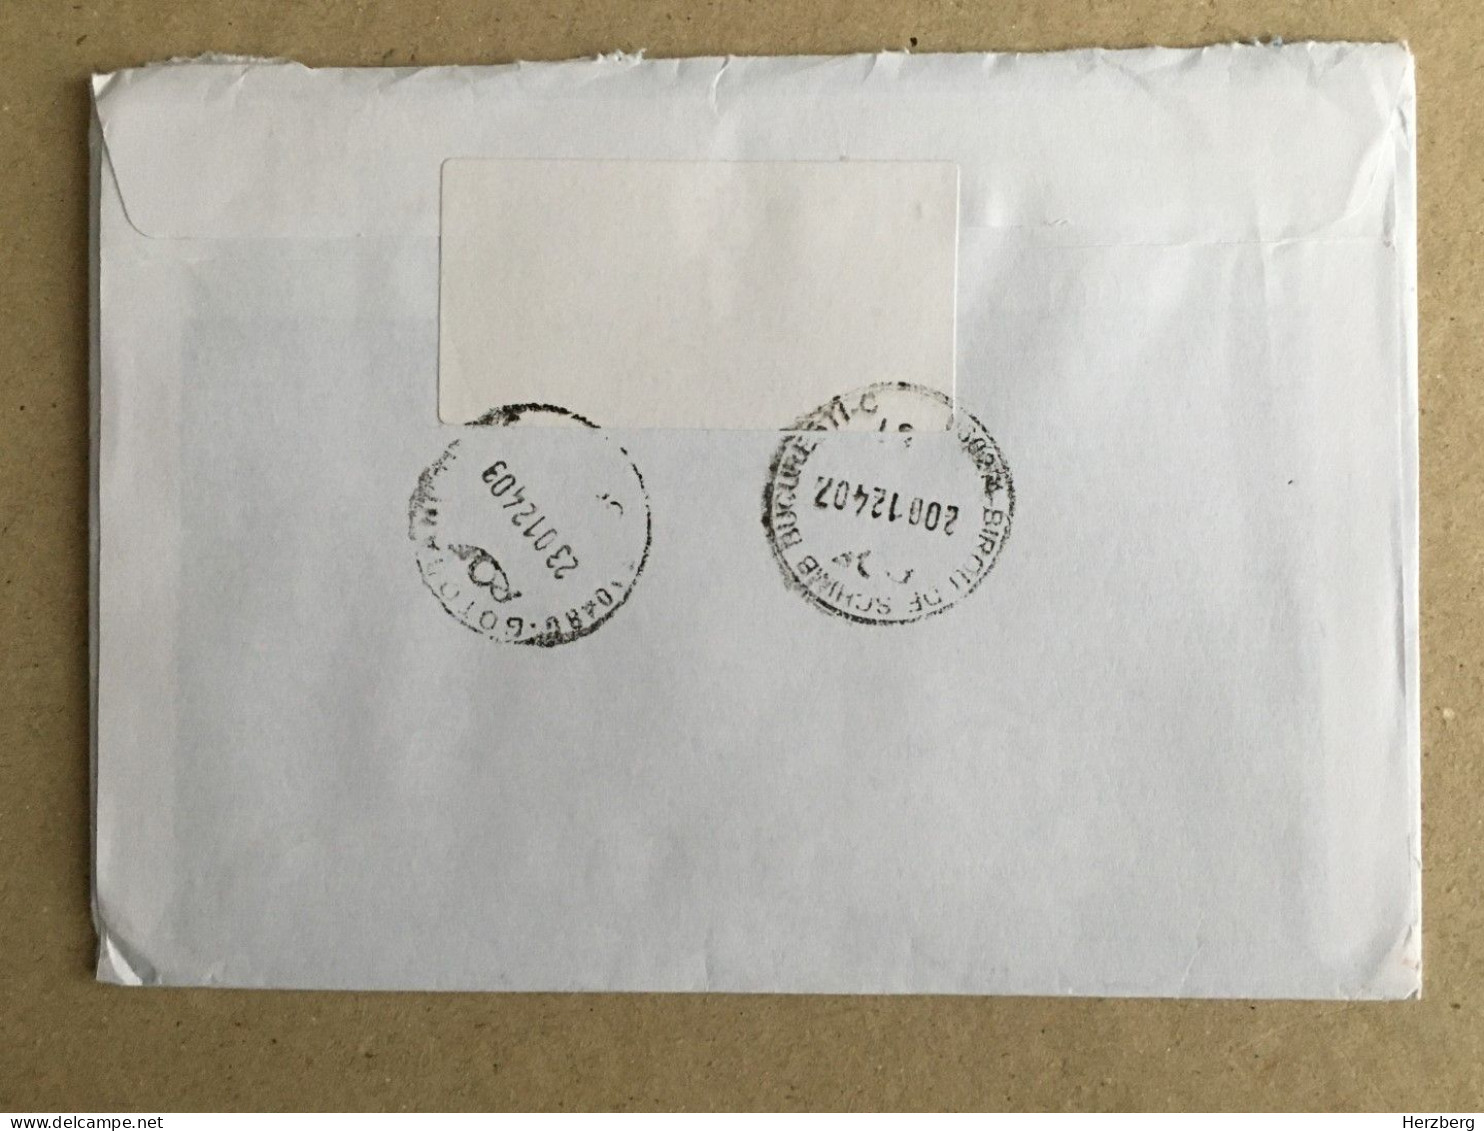 Poland Polska Used Letter Stamp Circulated Cover Registered Barcode Label Printed Sticker Stamp 2020 - Briefe U. Dokumente